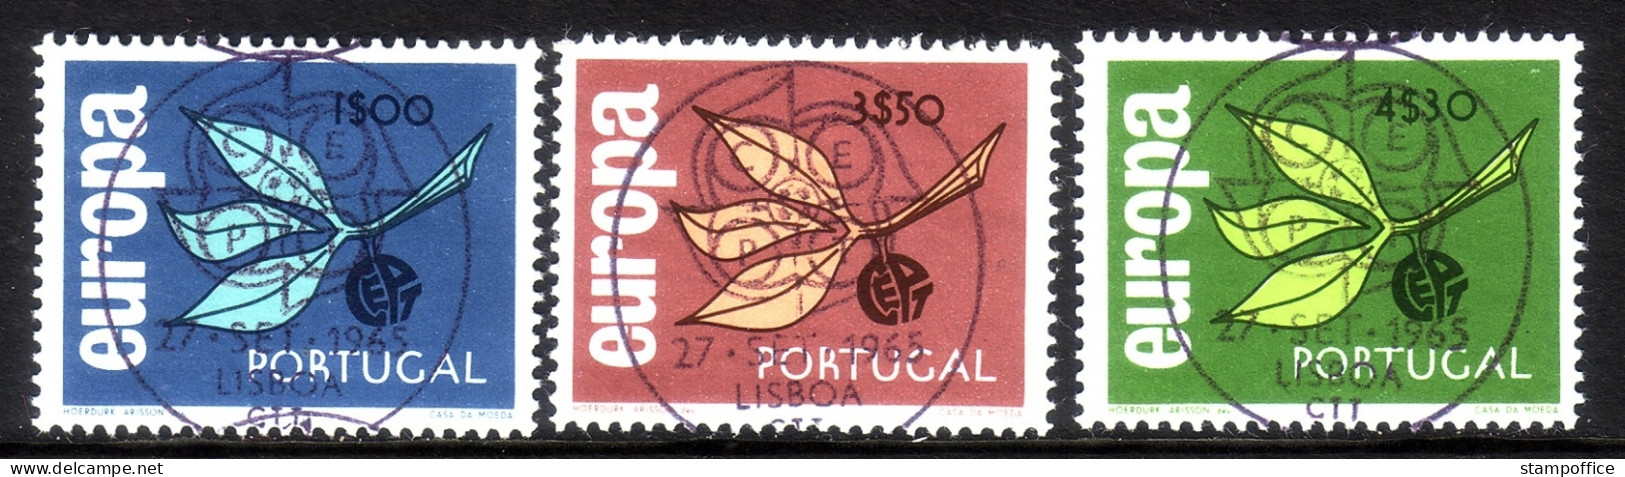 PORTUGAL MI-NR. 990-992 O (VOLLSTEMPEL) EUROPA 1965 ZWEIG - Oblitérés